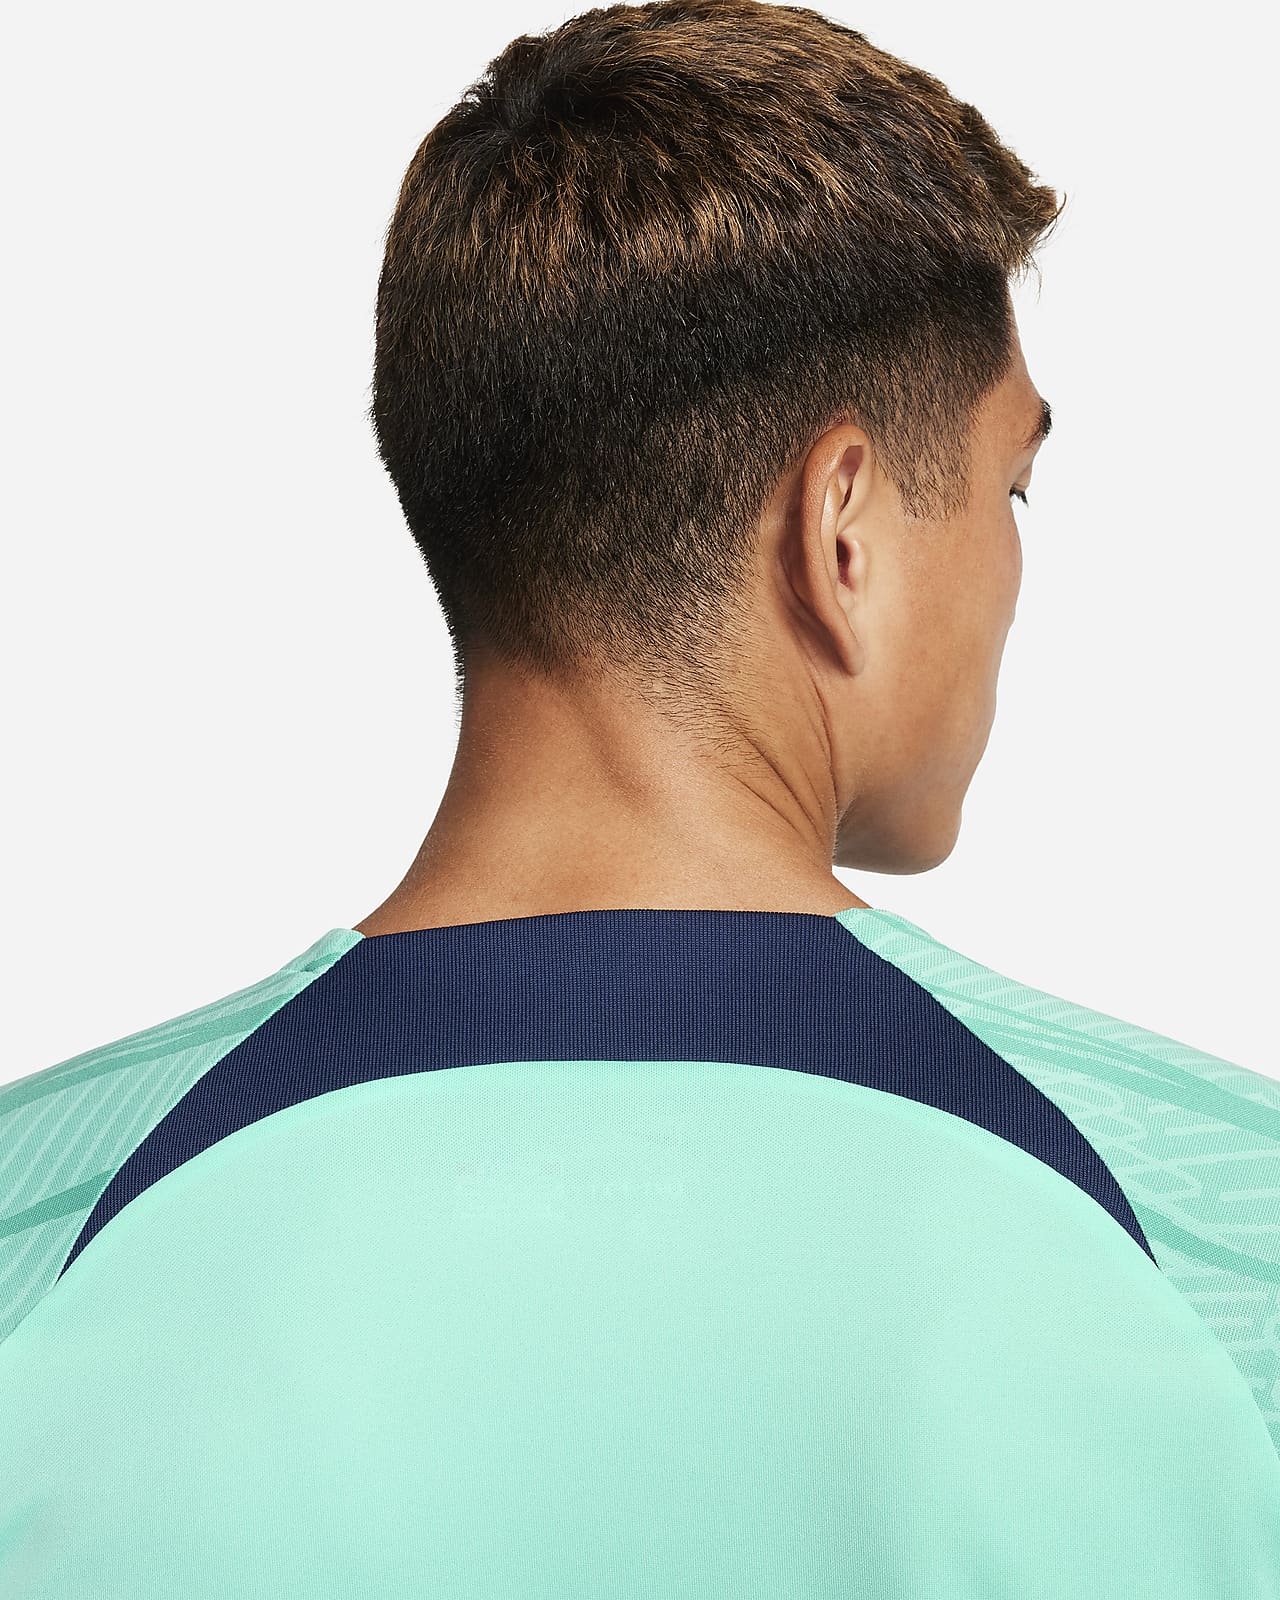 Nike Dri-FIT Strike Men's Short-Sleeve Soccer Top